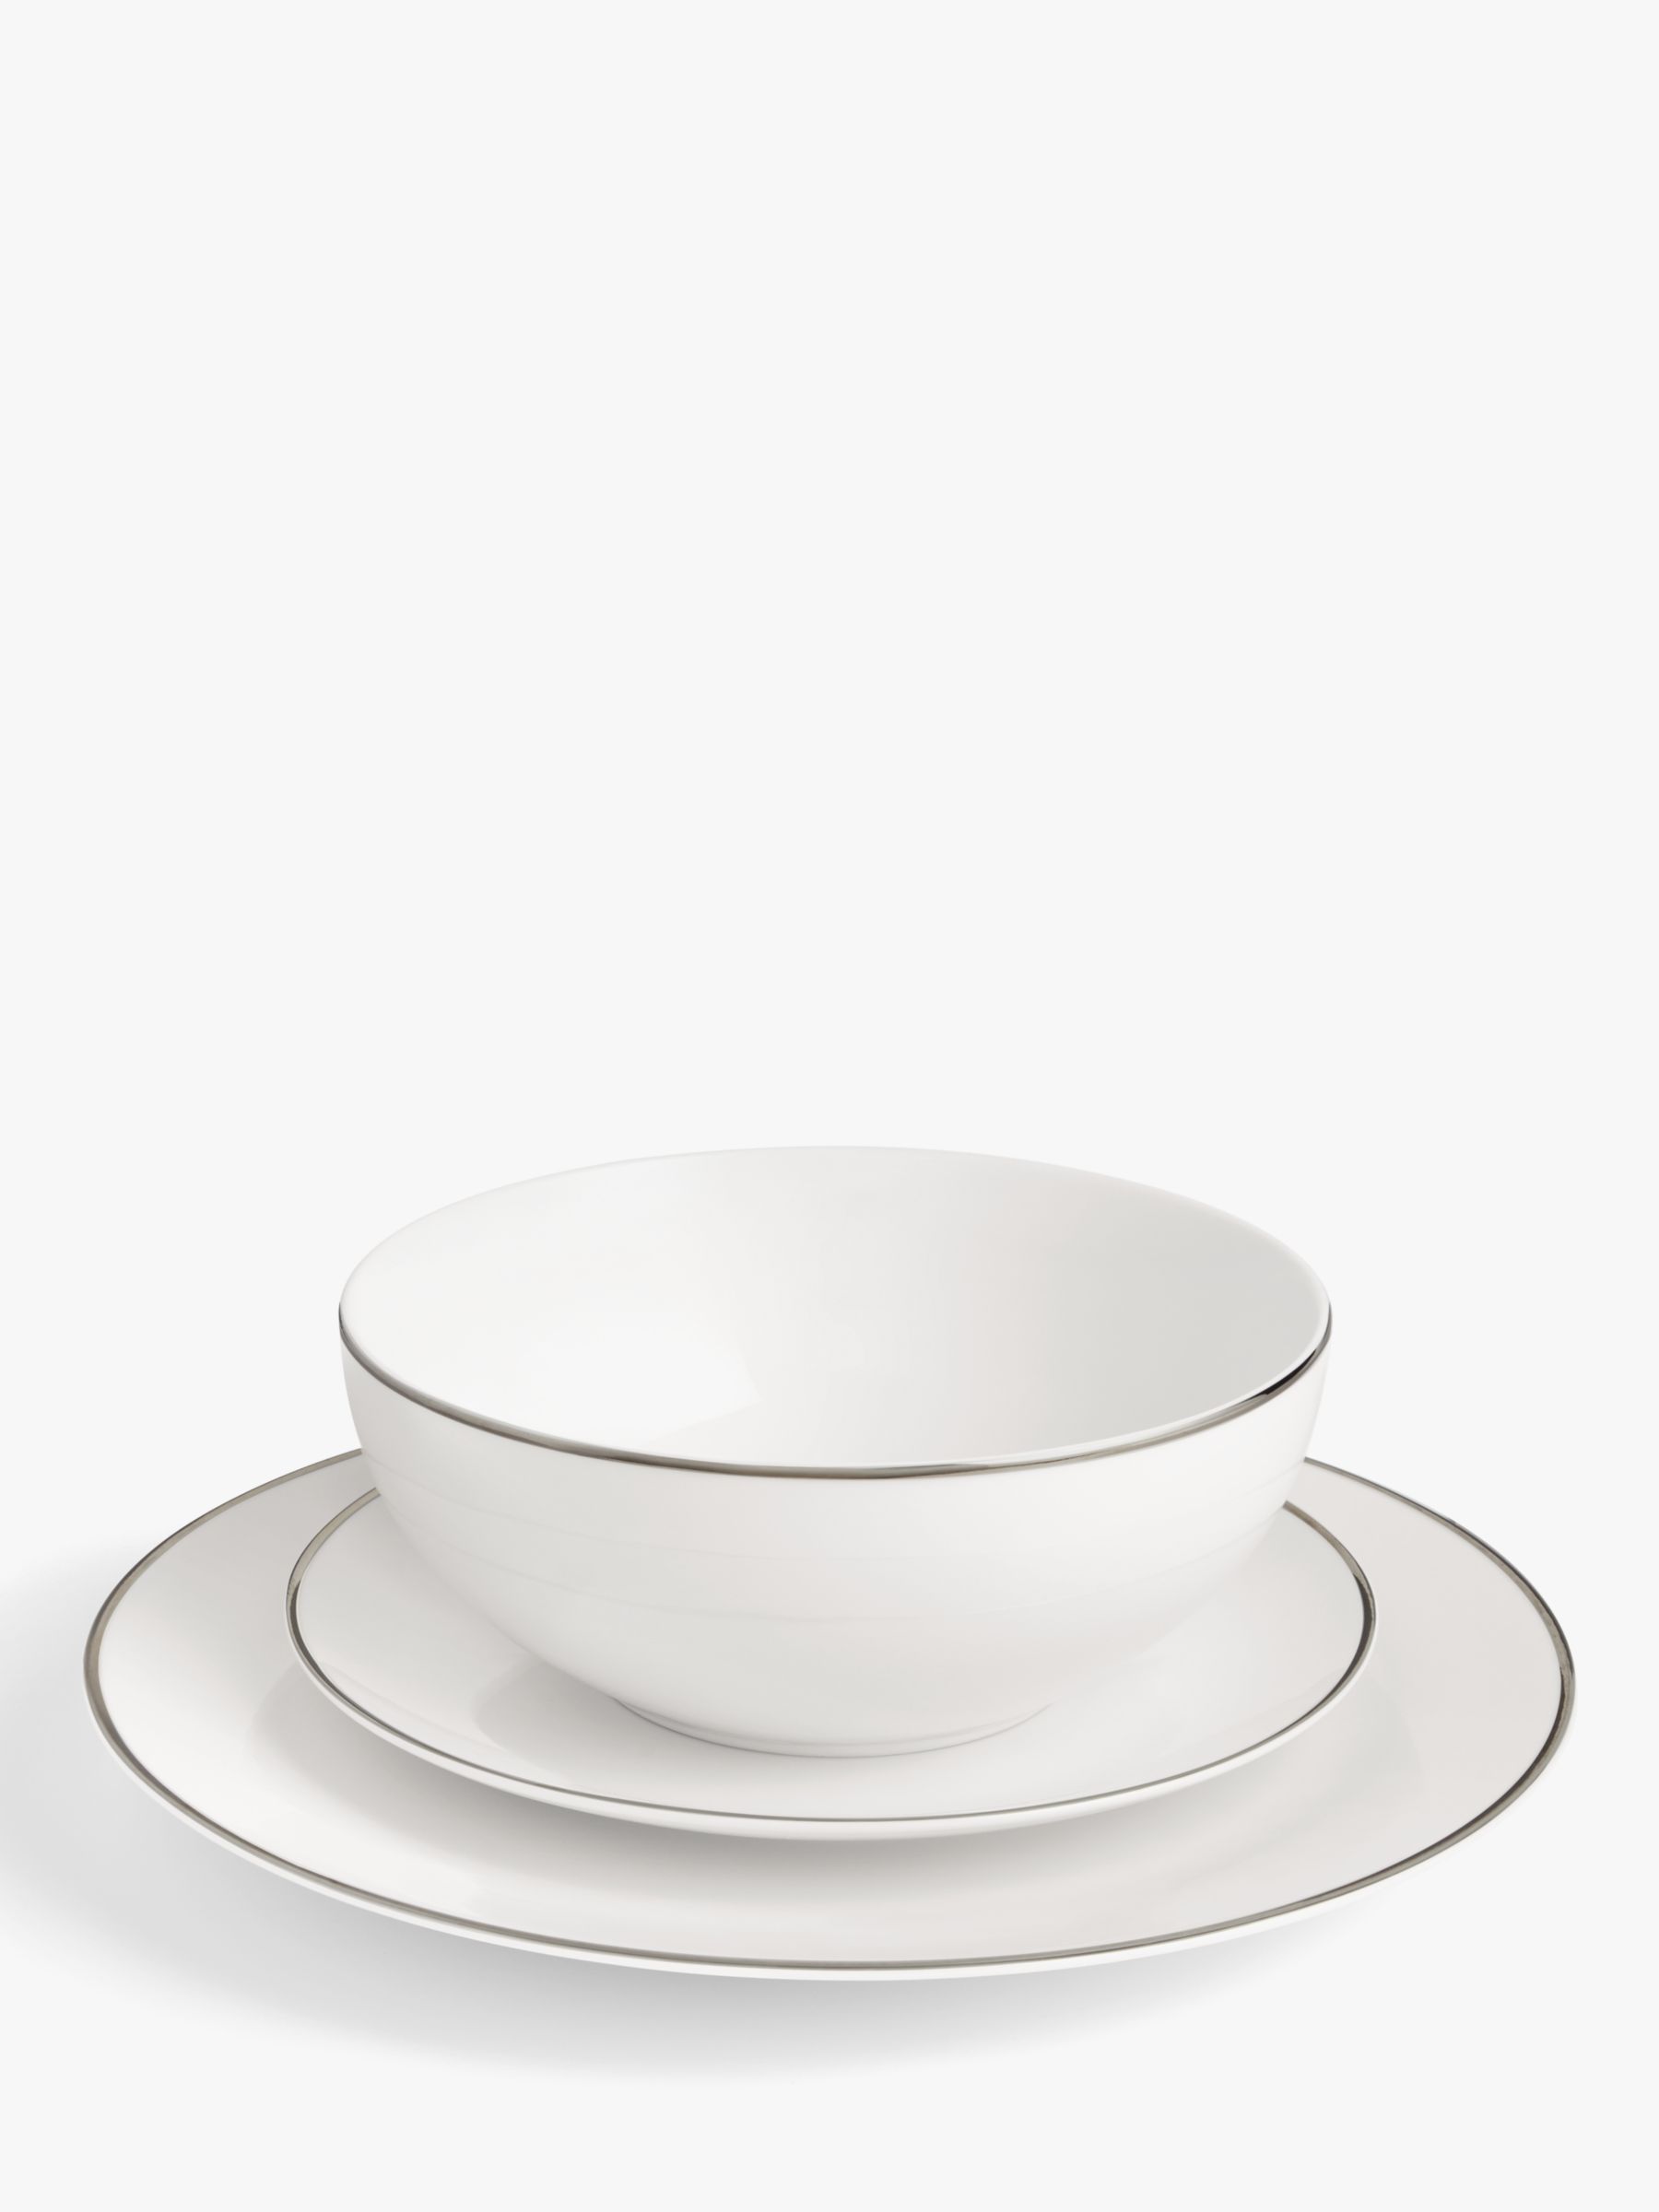 ANYDAY John Lewis & Partners Platinium Band Porcelain Boxed Dinnerware Set, 12 Piece, White/Silver